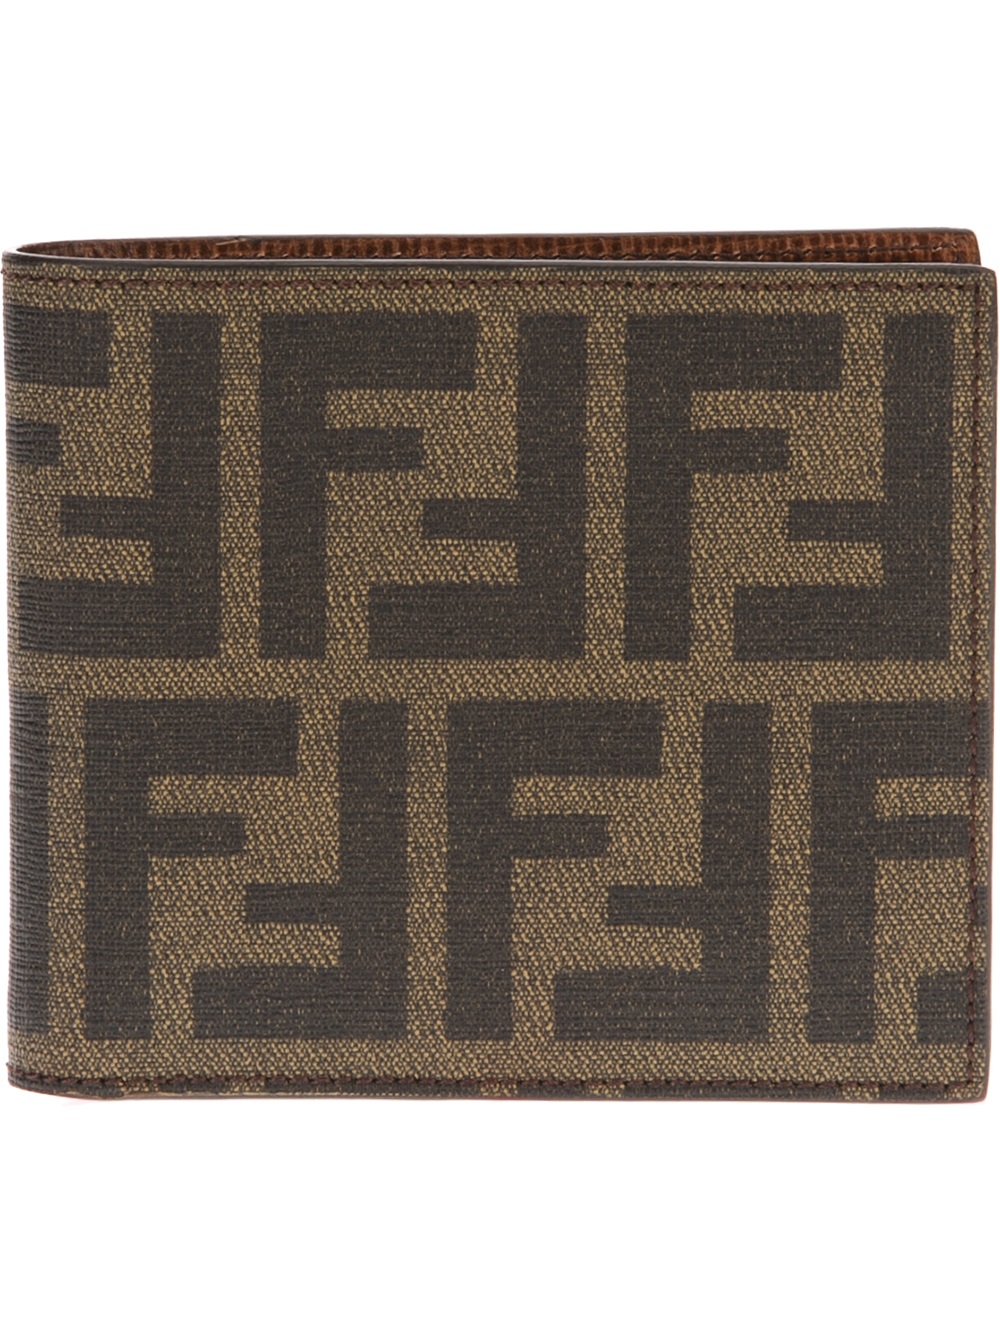 Fendi Monogram Print Bifold Wallet in Brown for Men | Lyst